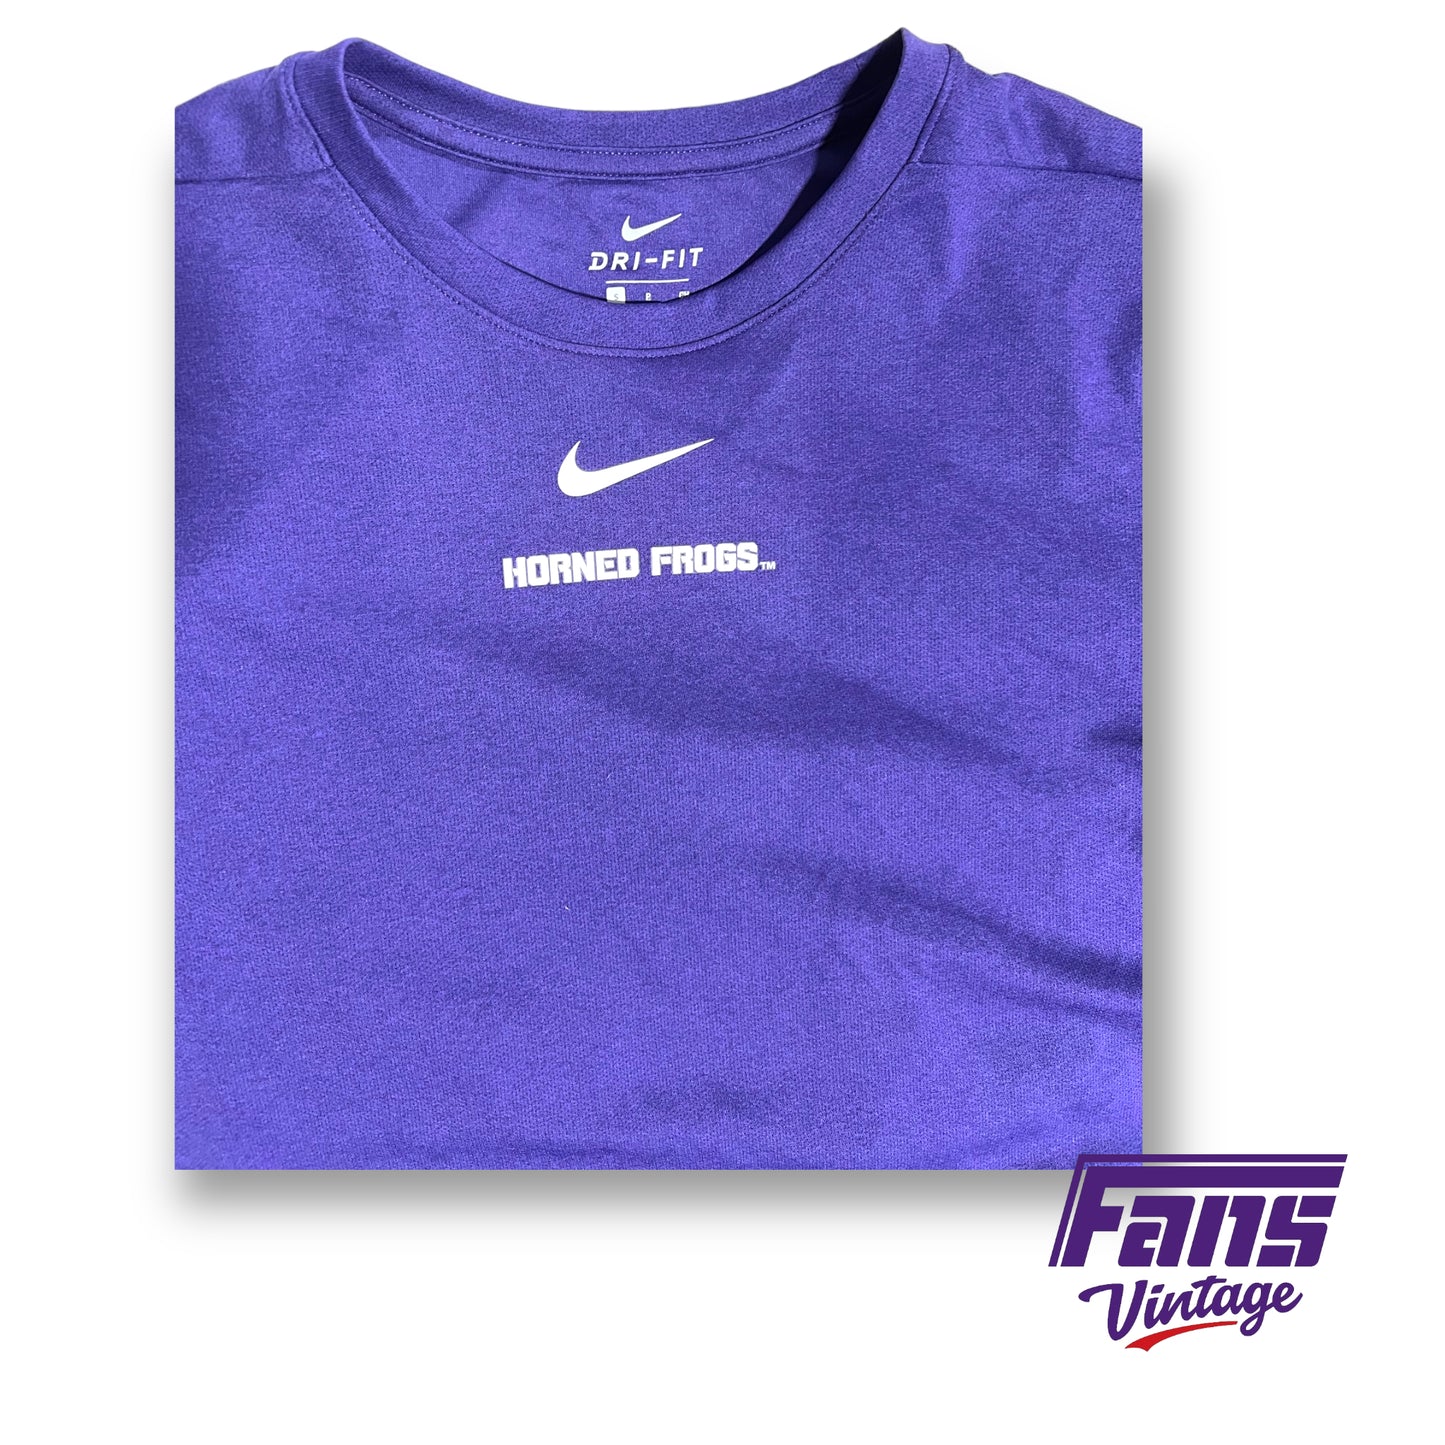 Nike TCU team issued dri-fit long sleeve shirt